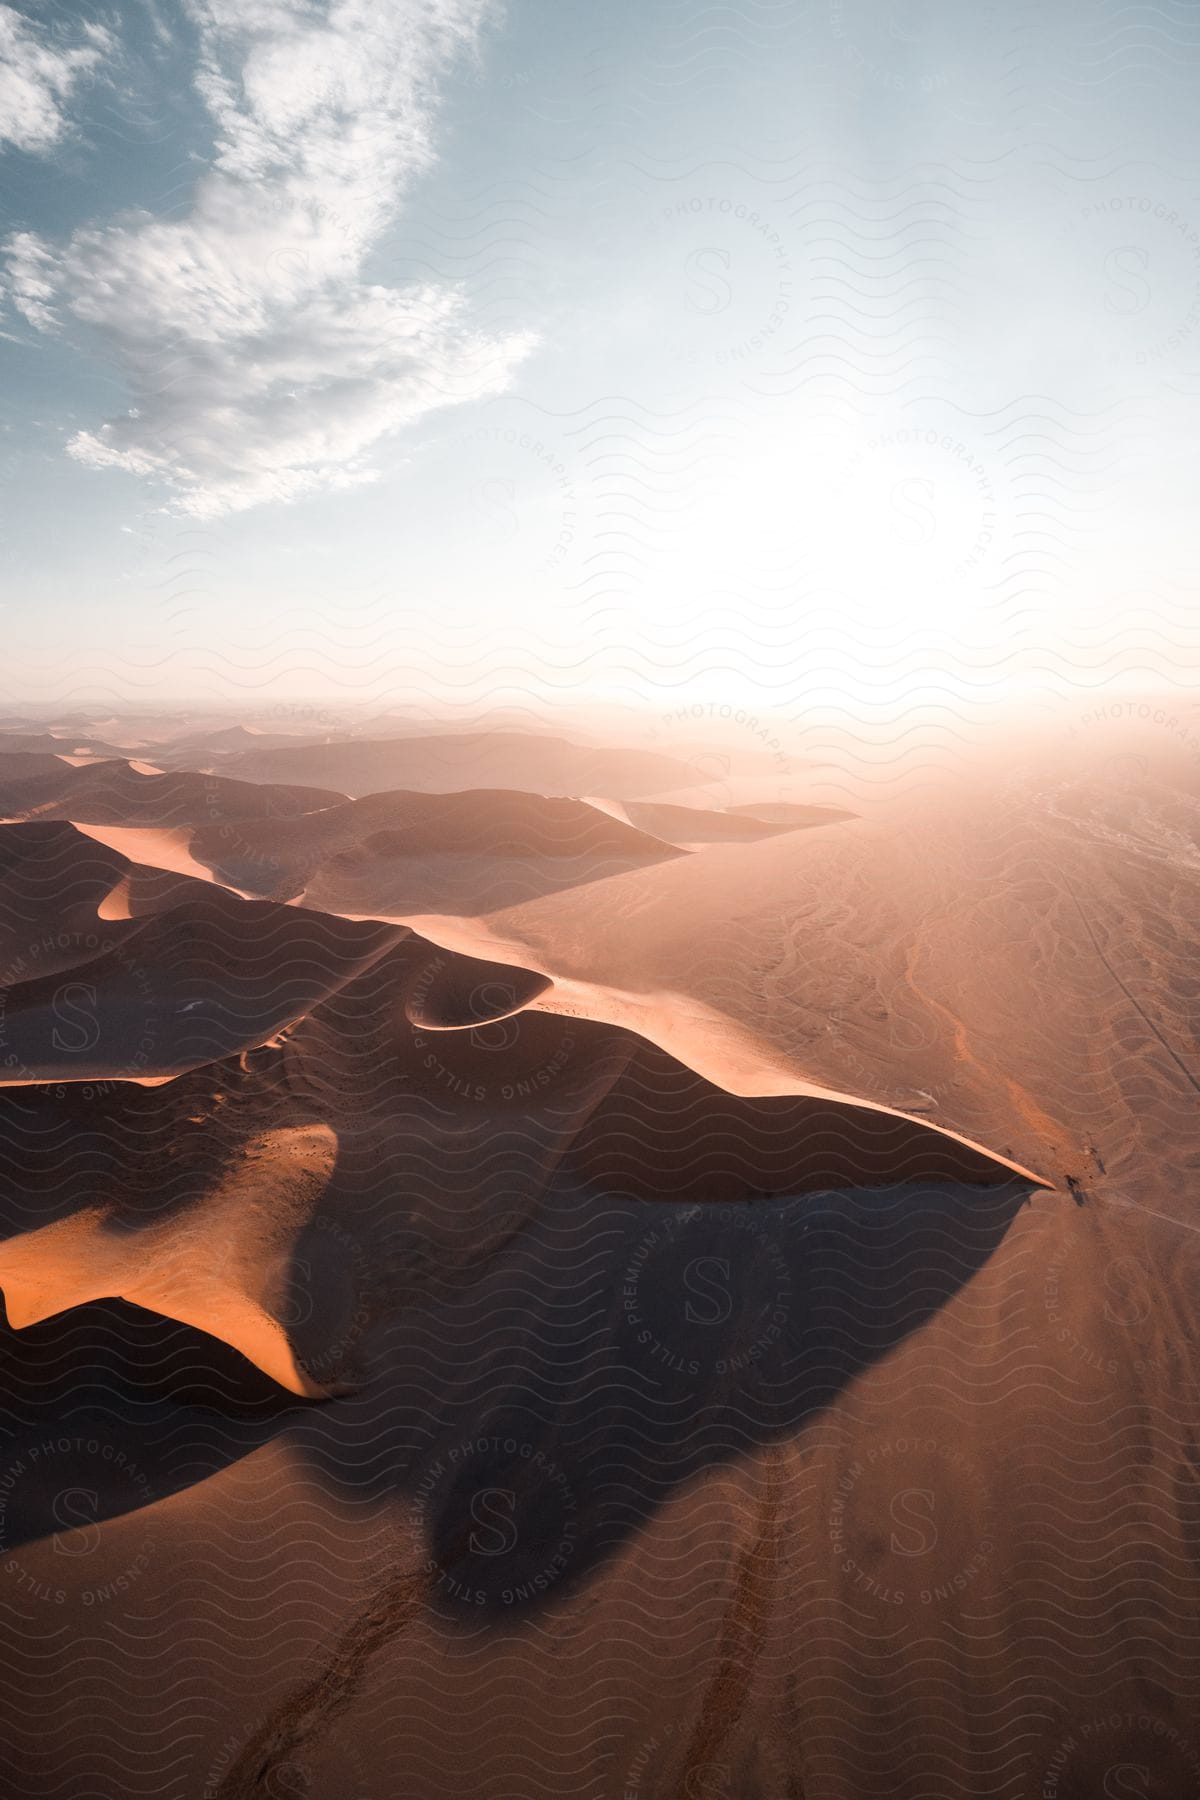 Aerial shot of desert landscape with dunes